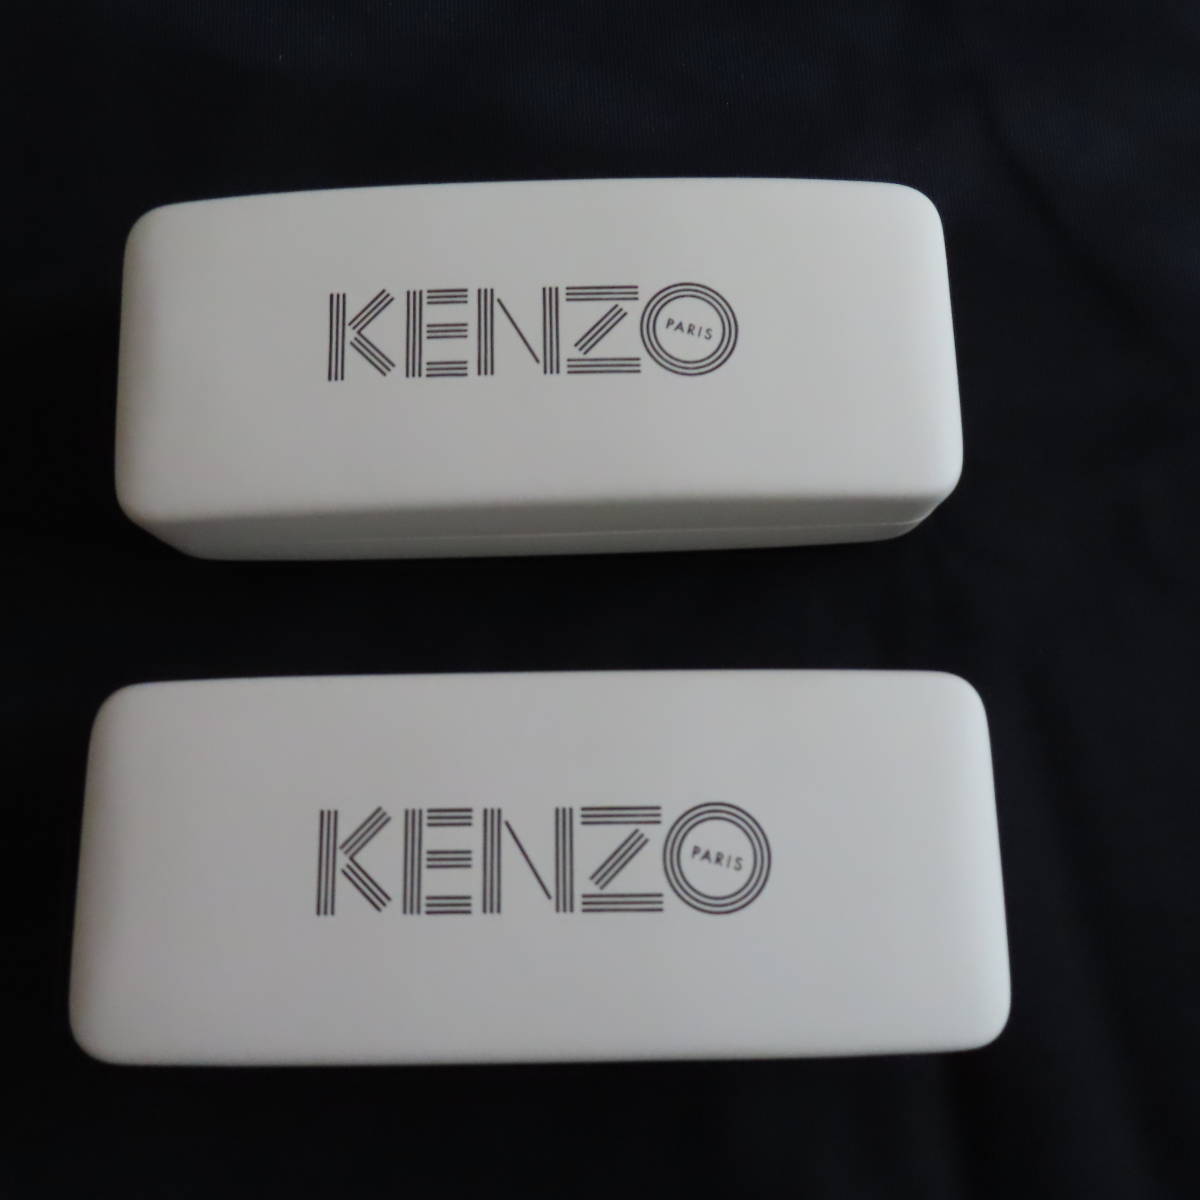 KENZO Kenzo glasses case sunglasses case 2 piece 